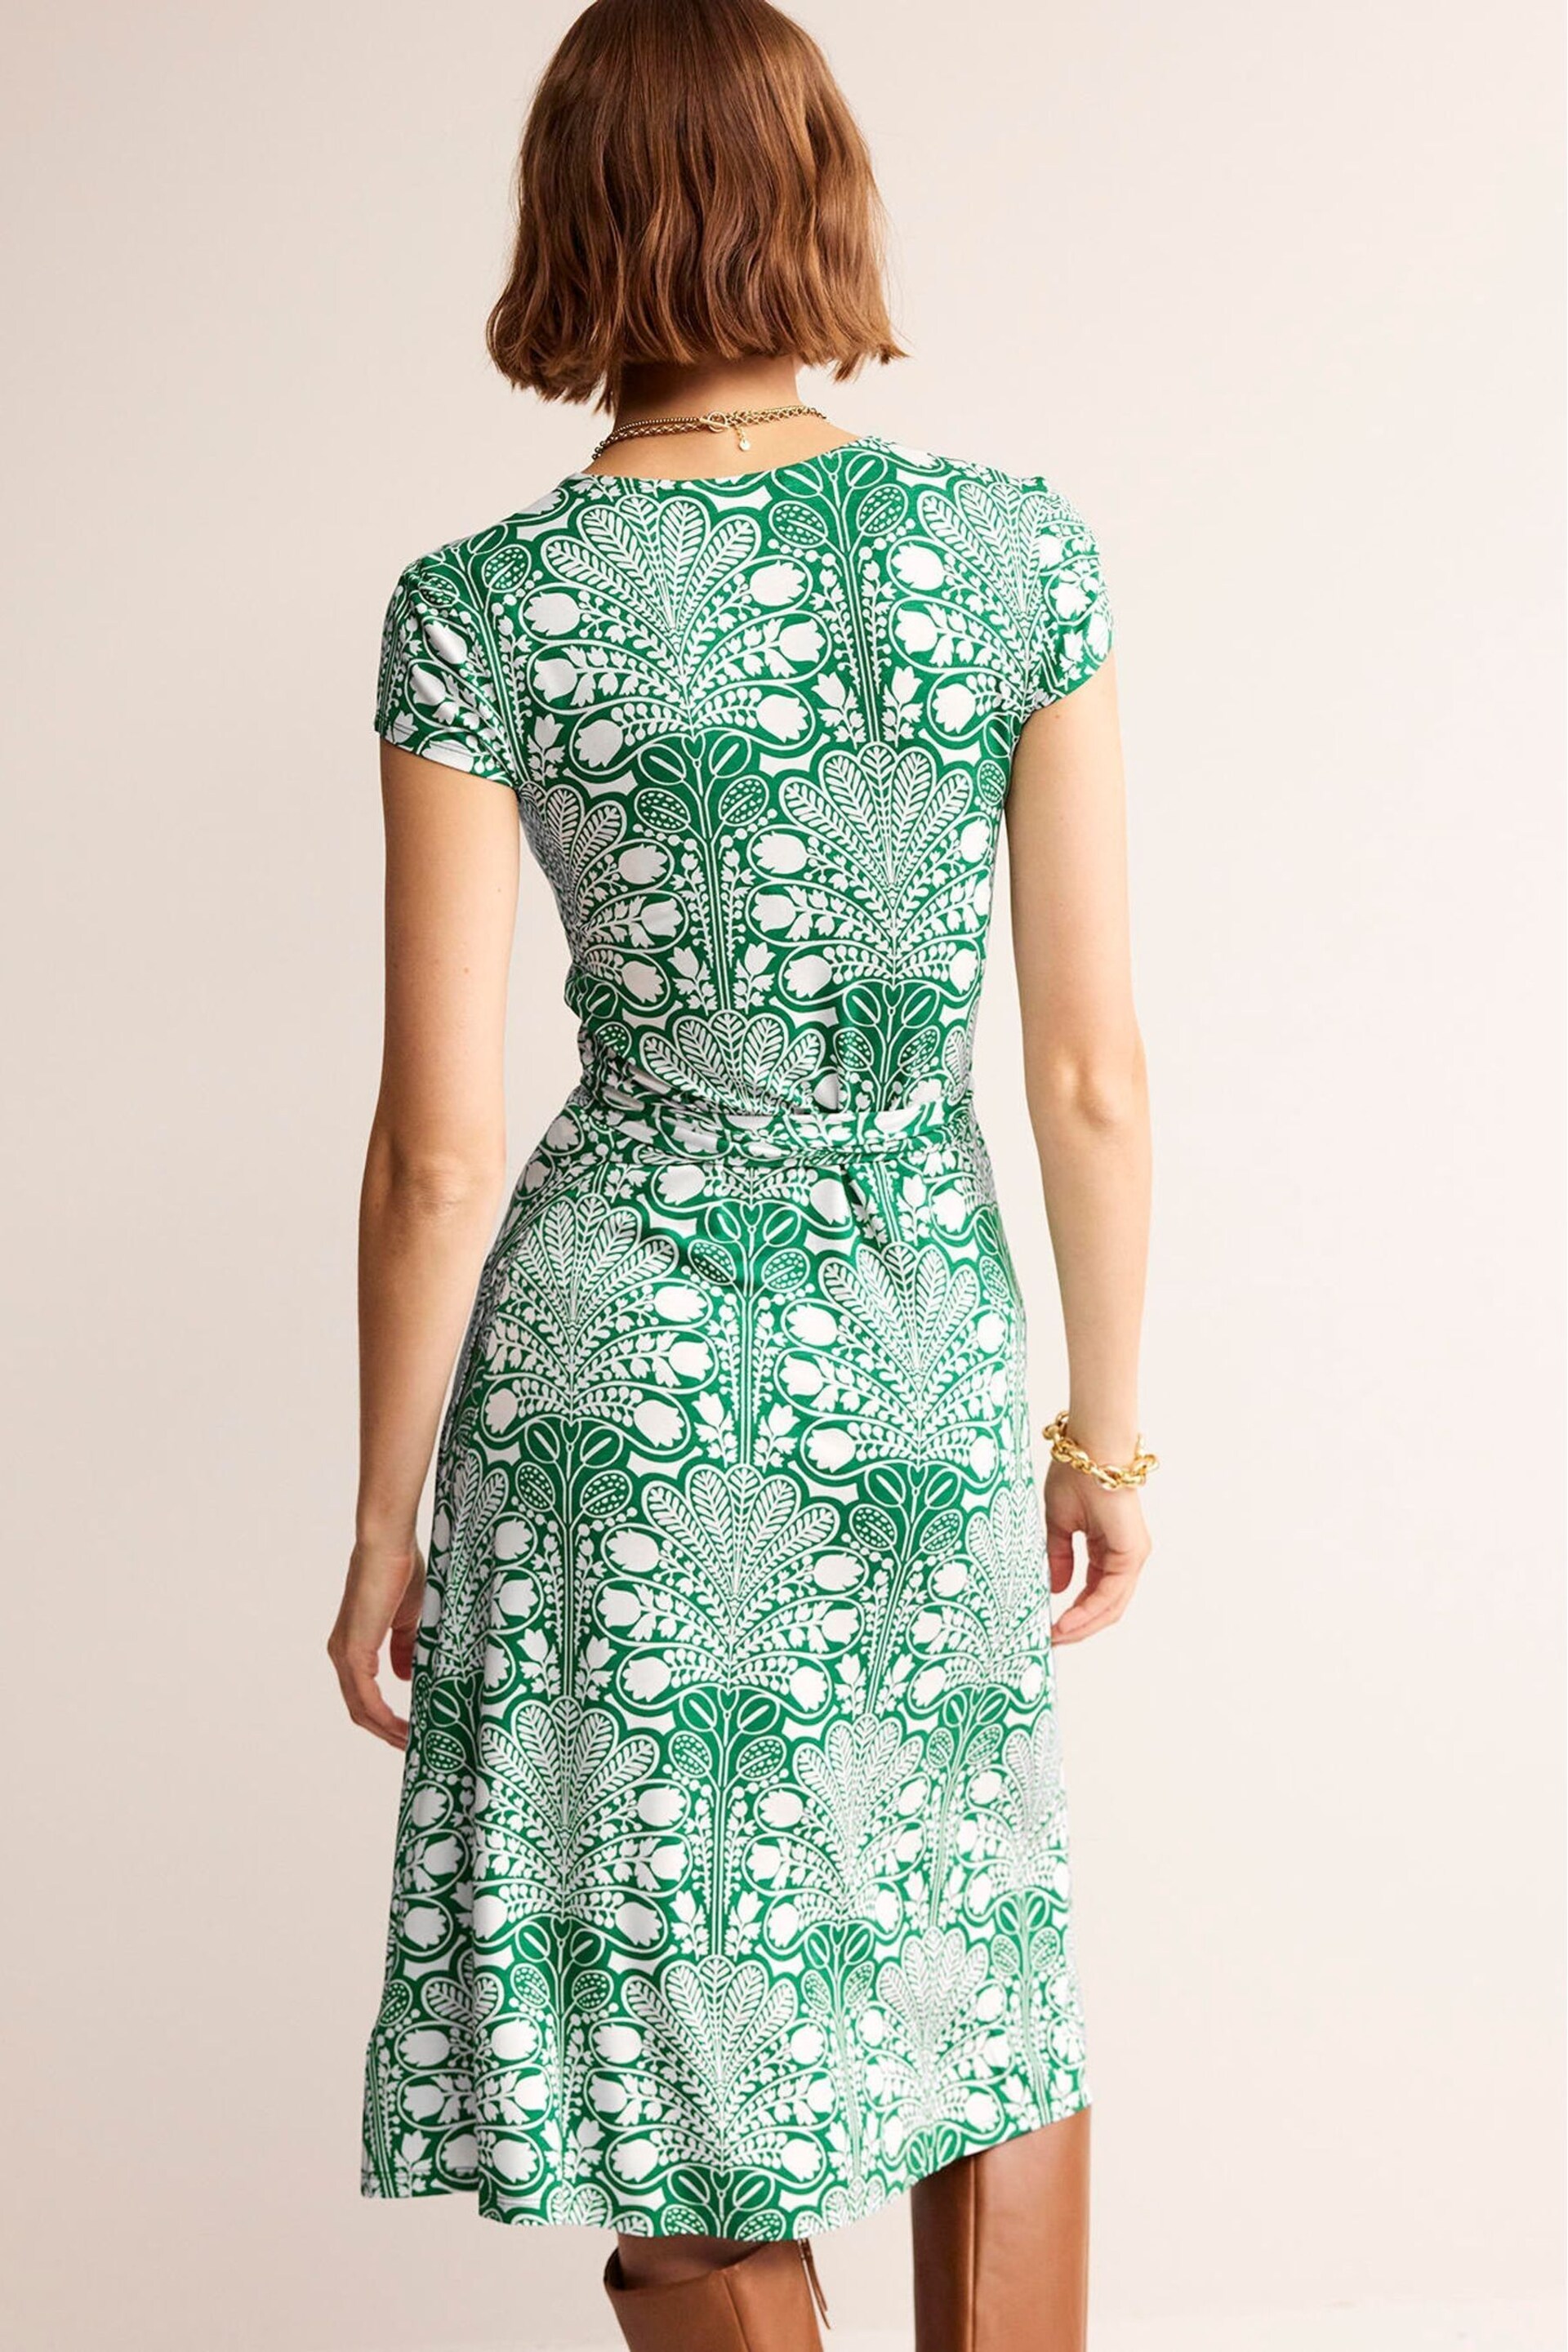 Boden Green Joanna Cap Sleeve Wrap Dress - Image 3 of 6